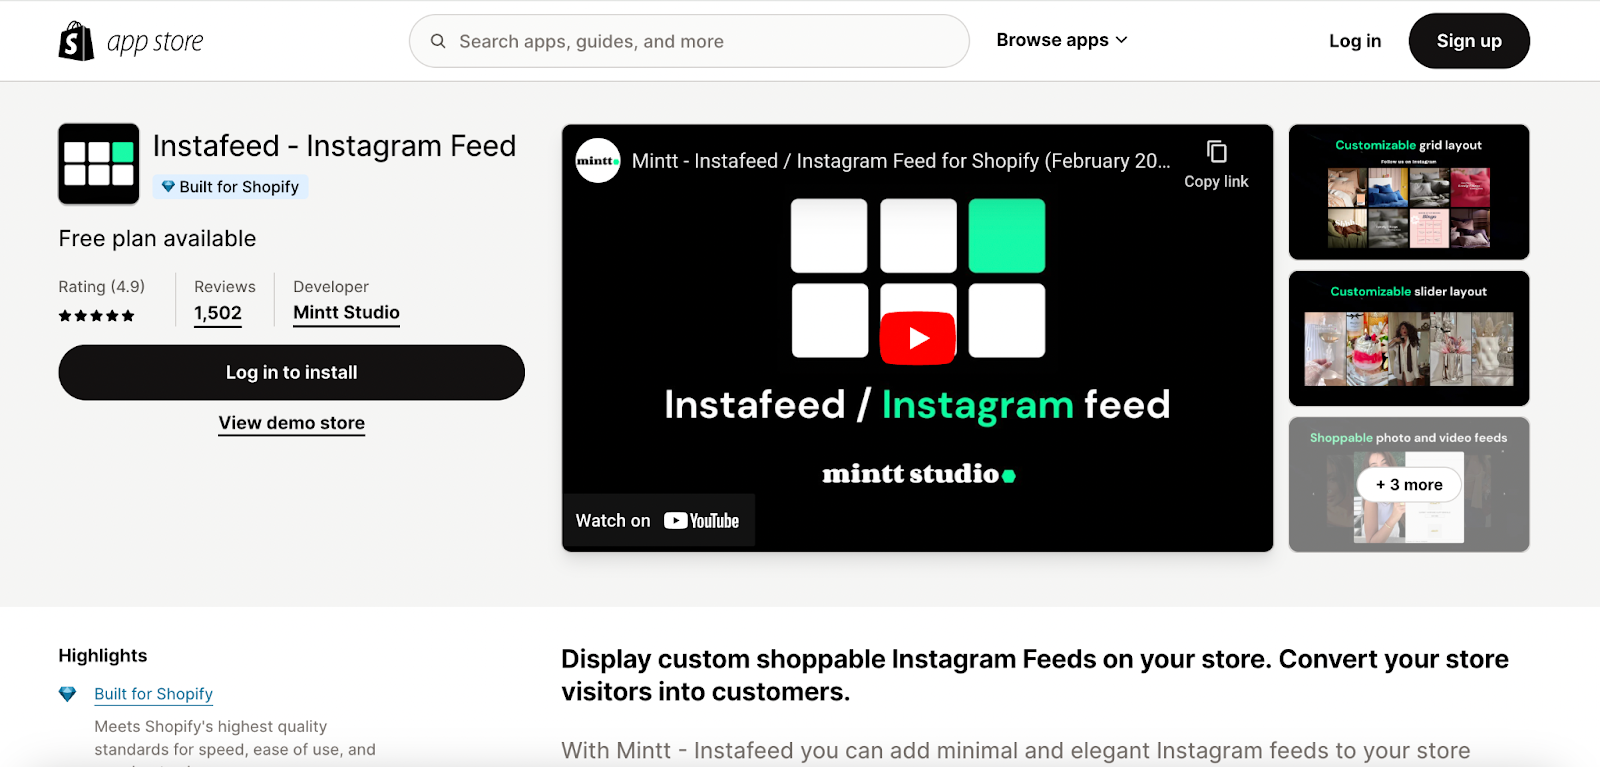 Instafeed ‑ Instagram Feed